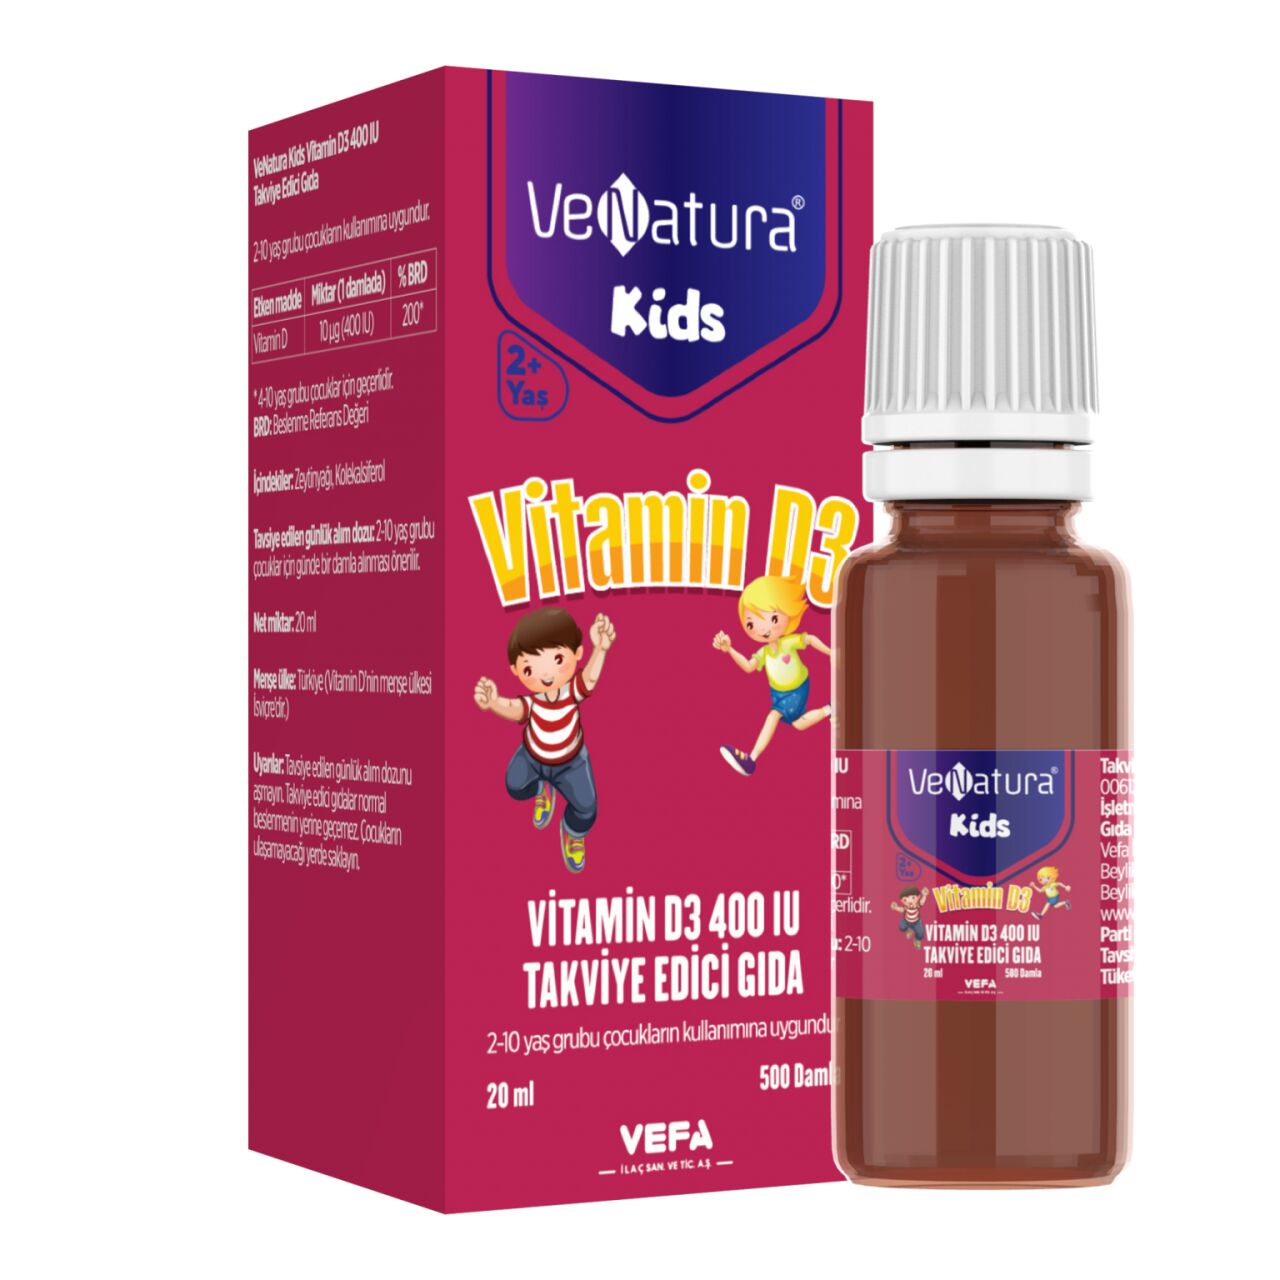 Venatura Kids Vitamin D3 400IU Damla 20ml